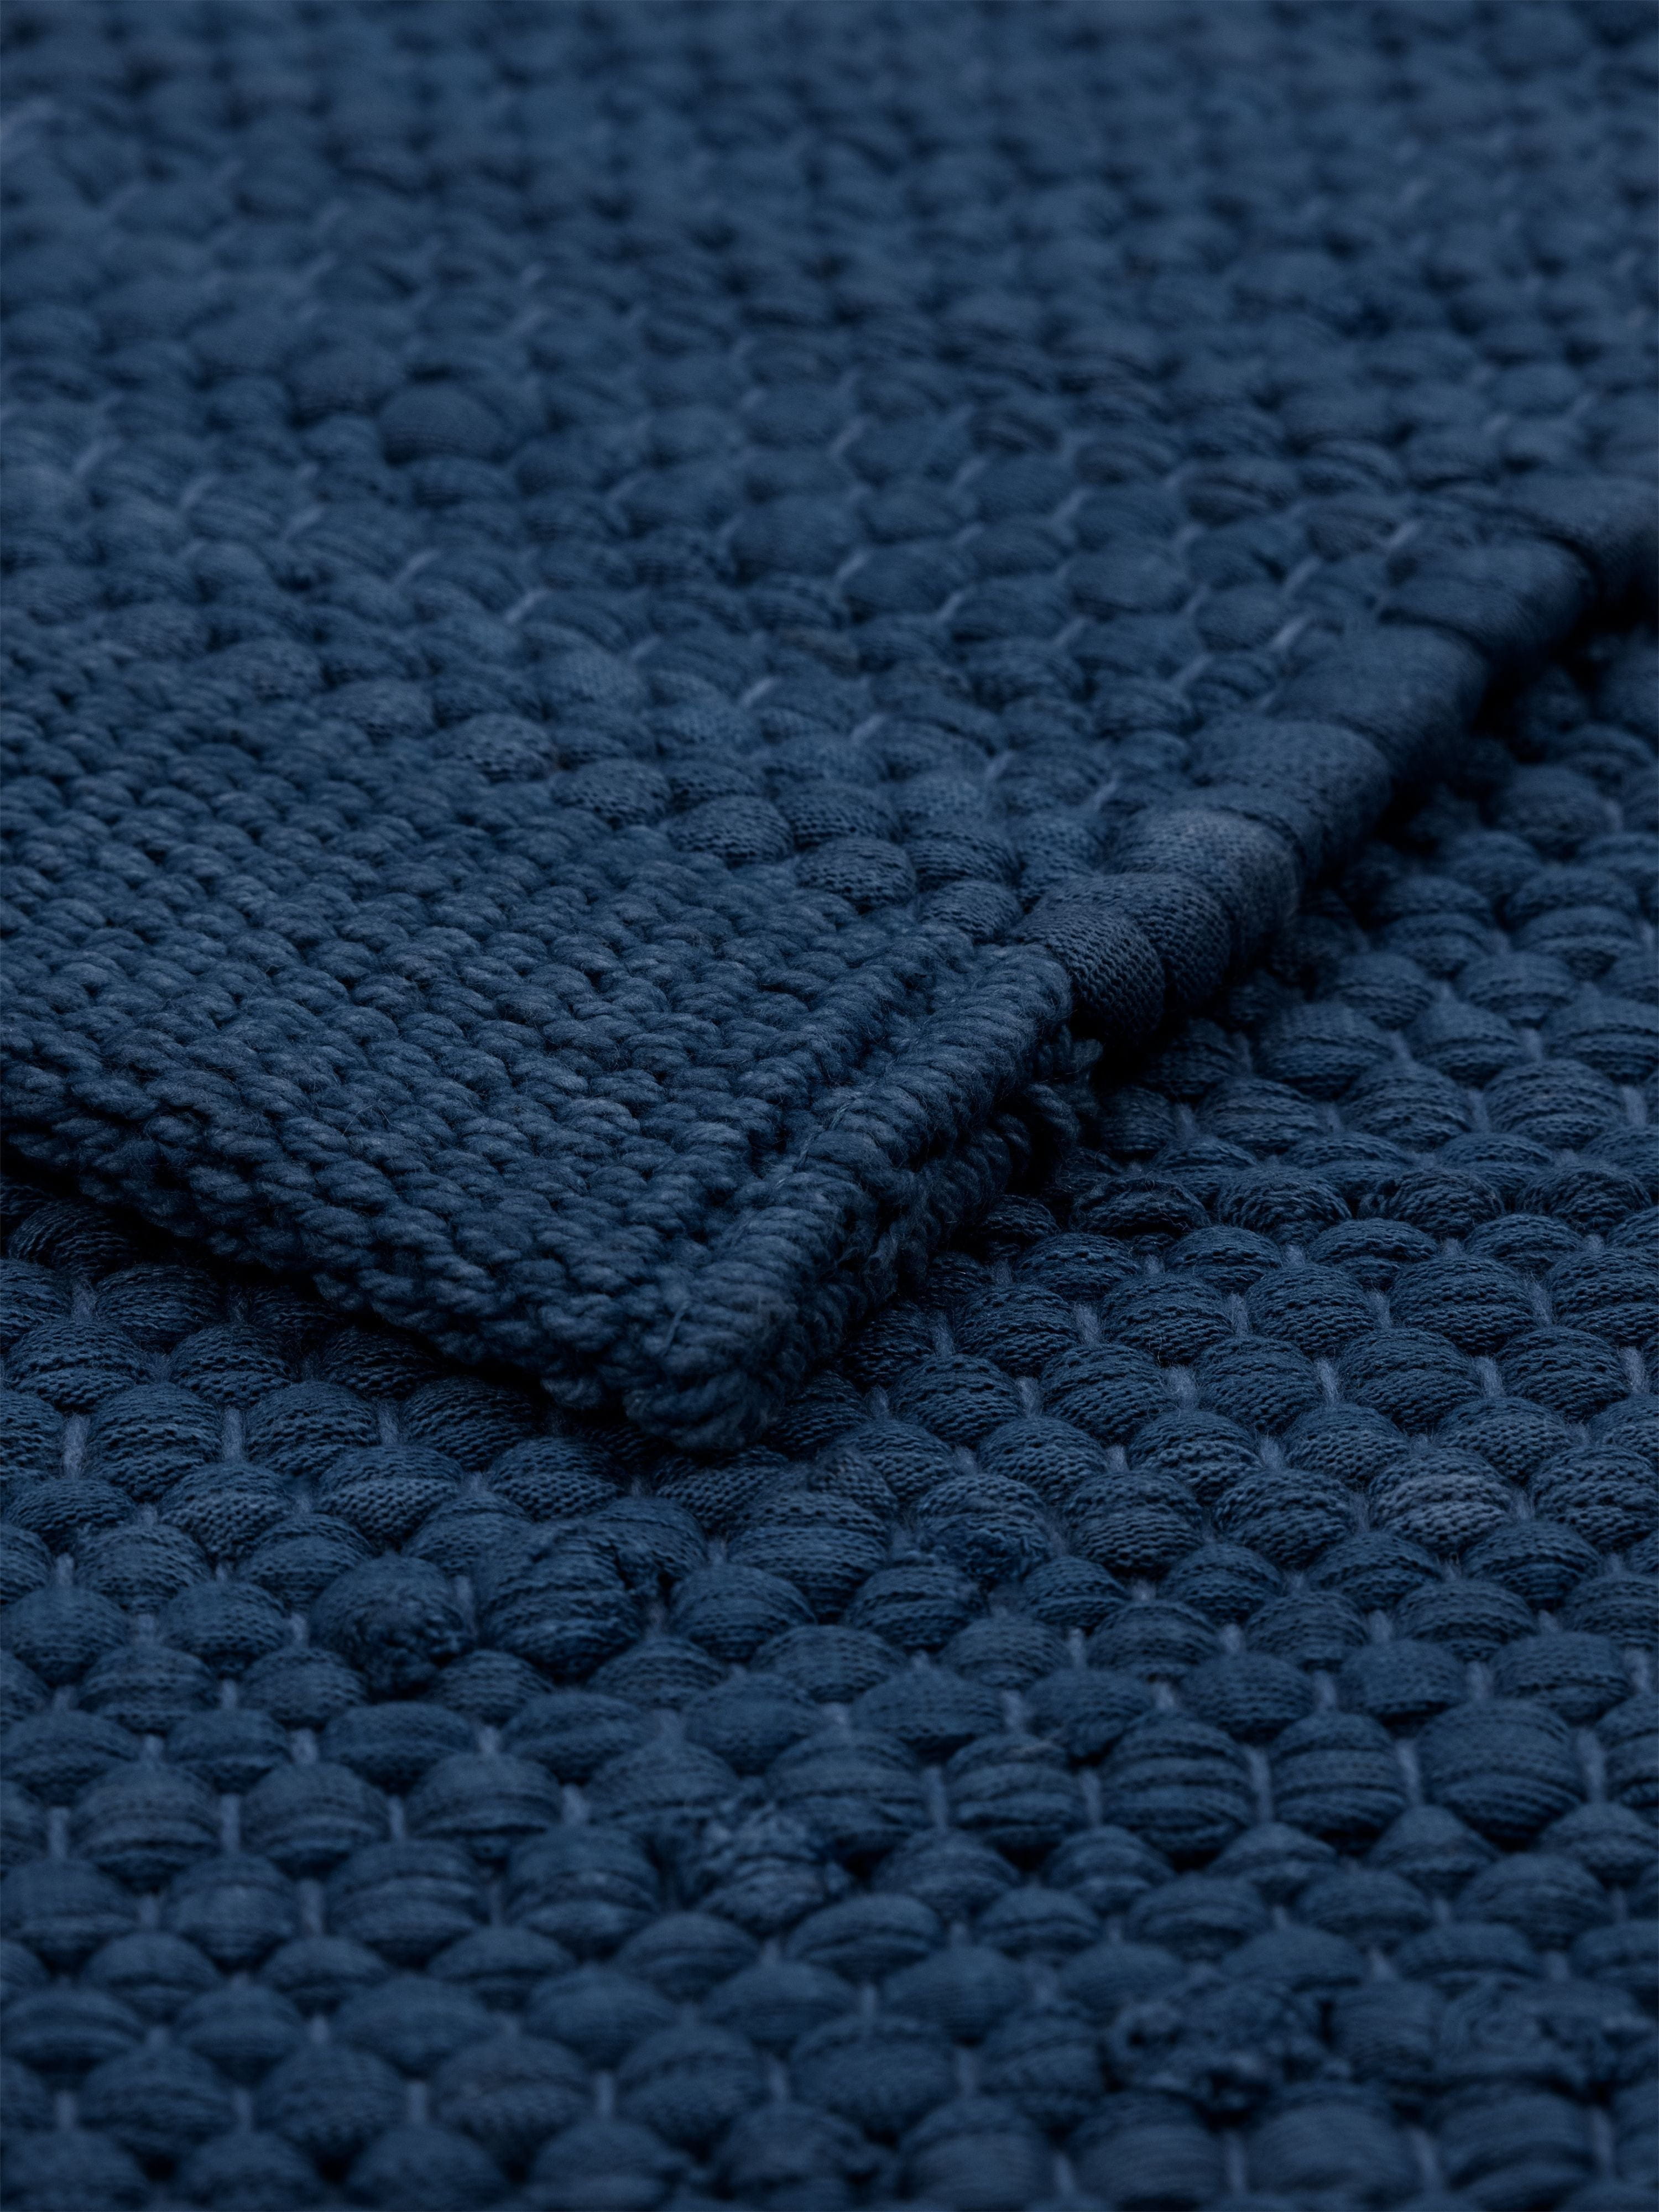 Rug Solid Cotton Tæppe 140 x 200 Cm, Blueberry